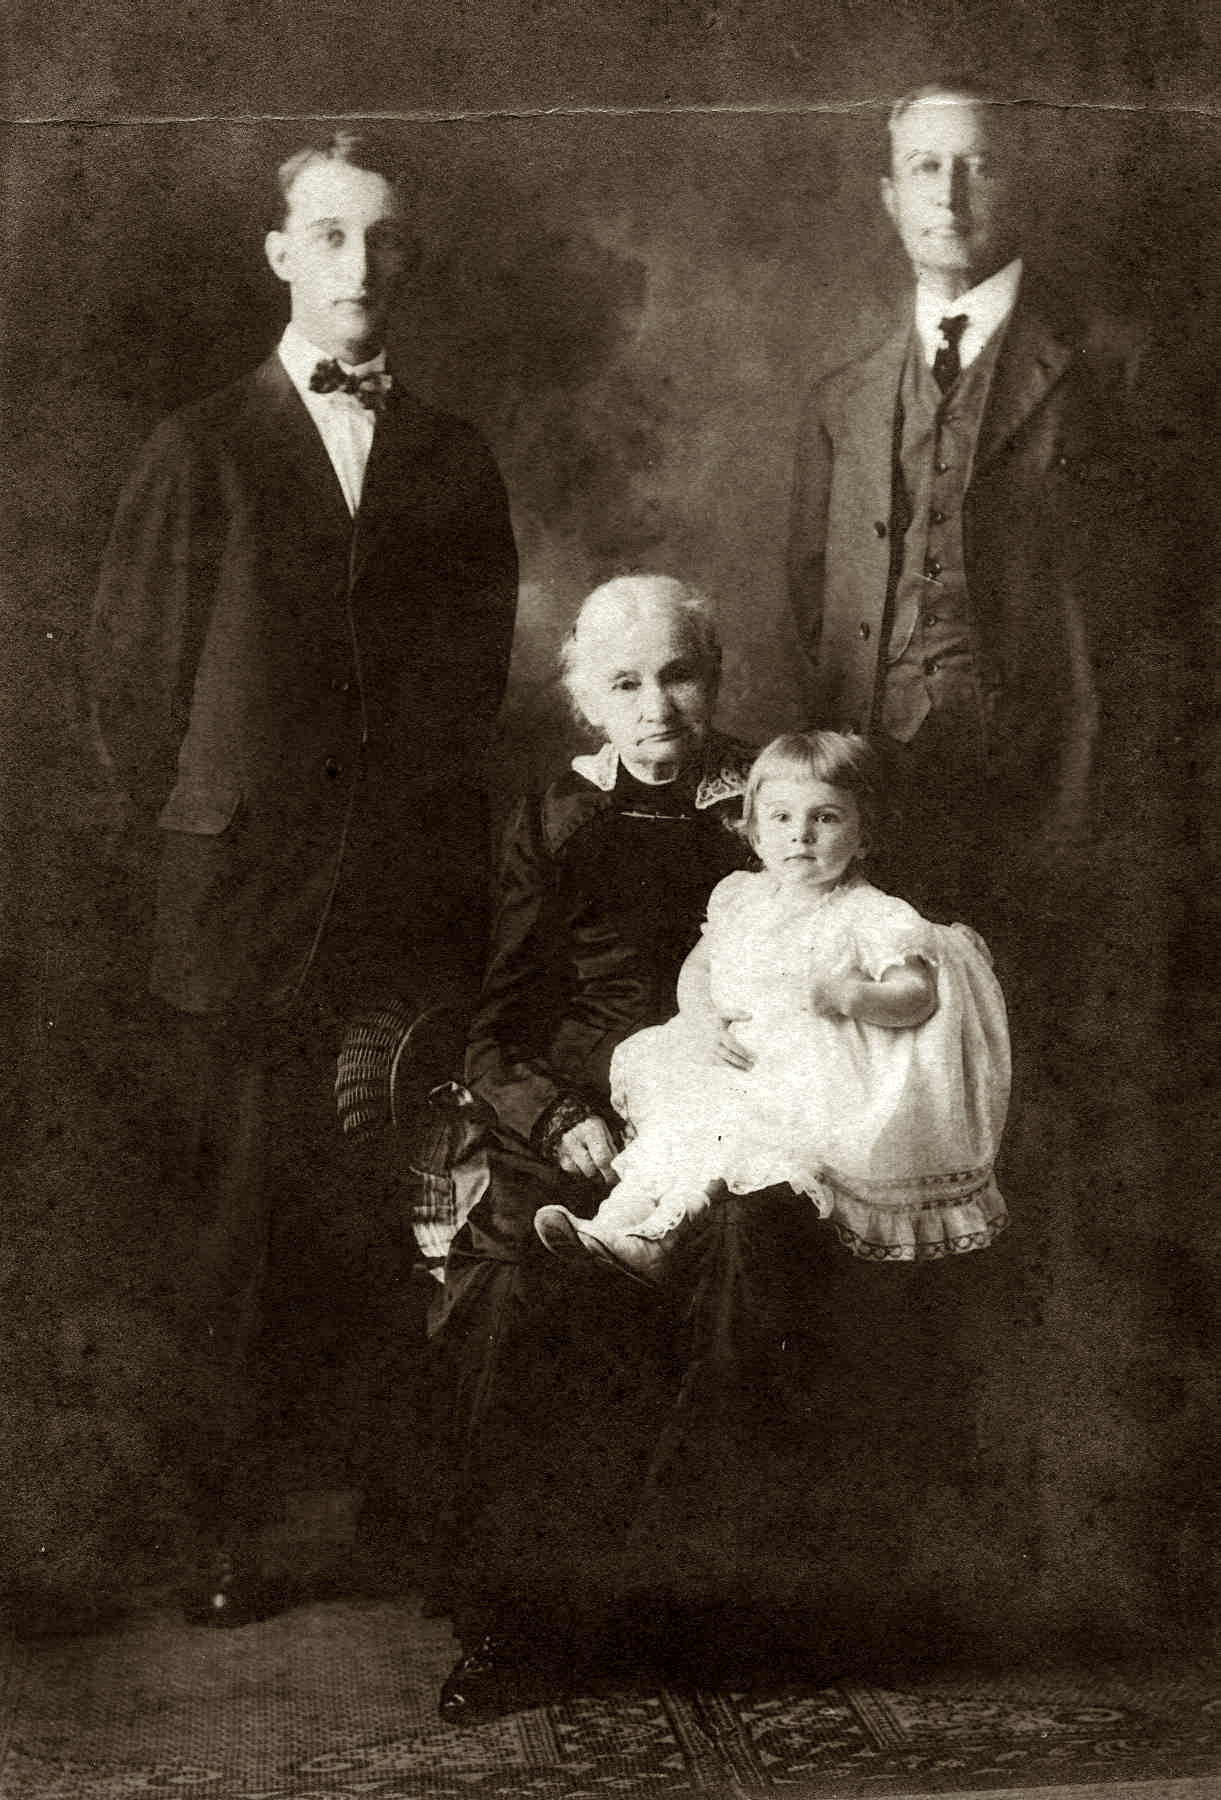 Mr. Stebbins Sr., Grandmother Stebbins (seated), Frank Charles Stebbins I & Ida Norma Stebbins (infant) about 1915.